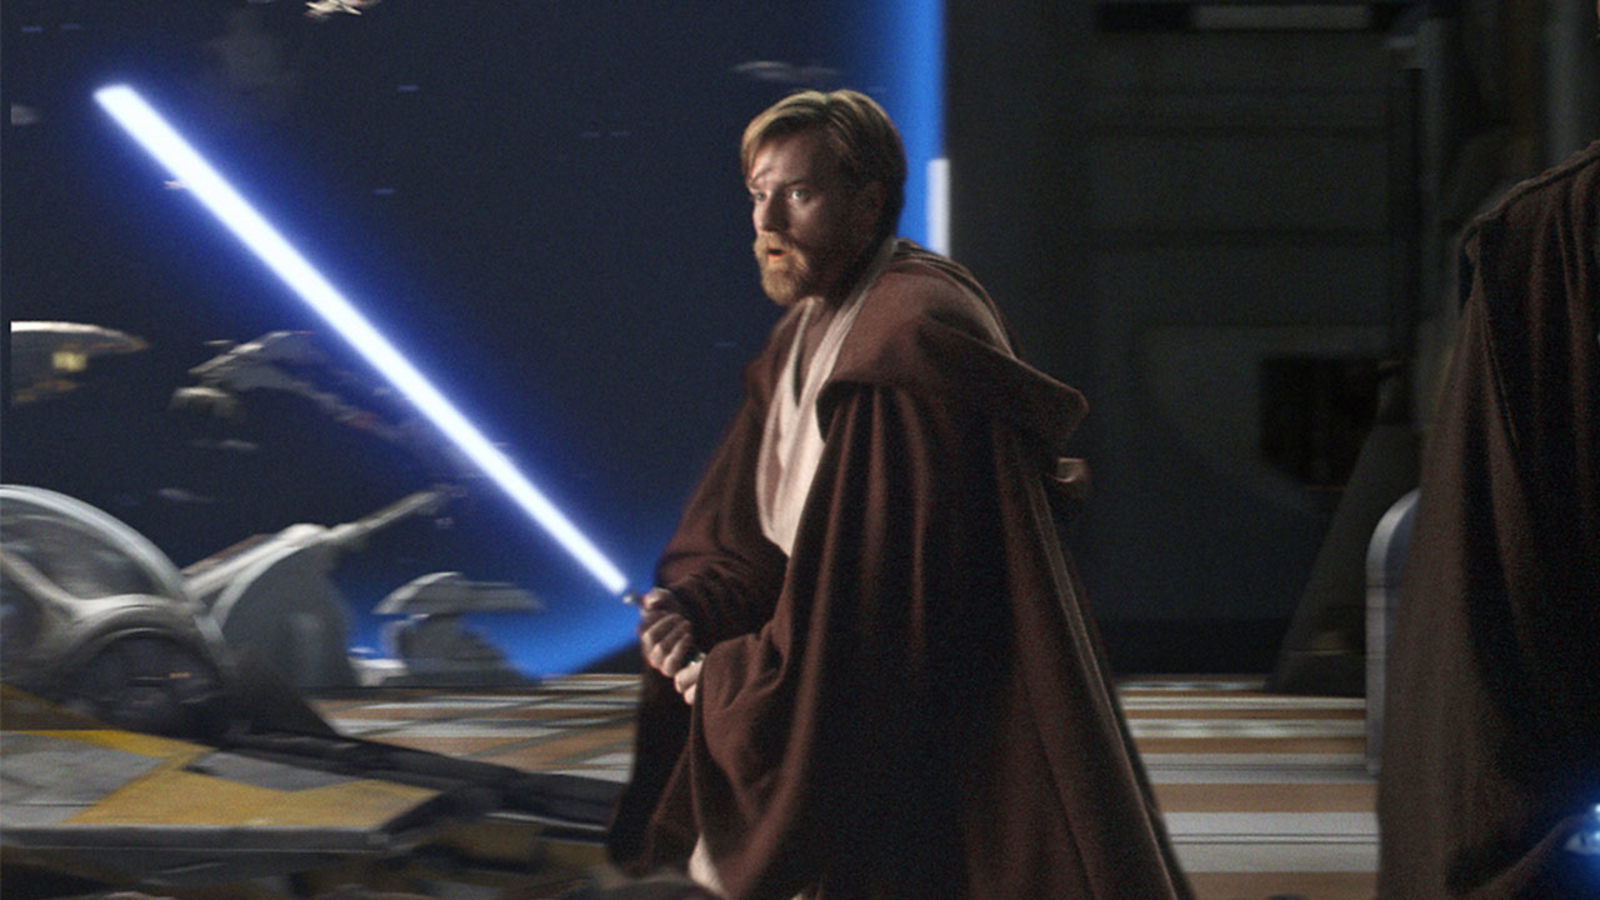 Ewan McGregor Obi Wan Kenobi Series Announced For Disney+ Streaming Service At D23 2019 Expo